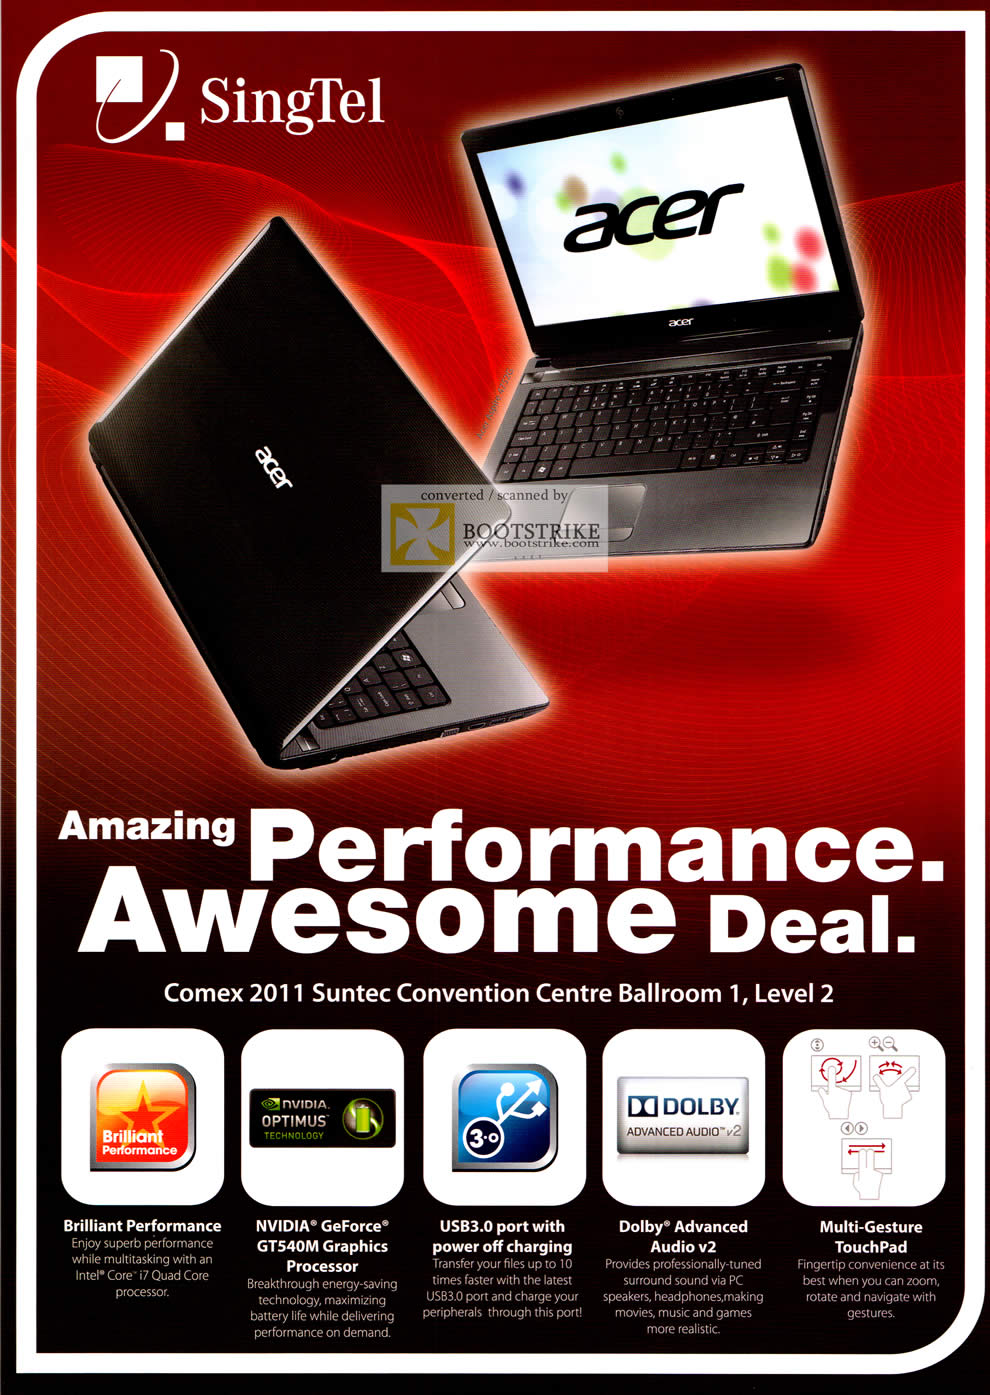 COMEX 2011 price list image brochure of Singtel Acer Notebook Deal Geforce USB3 Dolby Advanced Audio V2